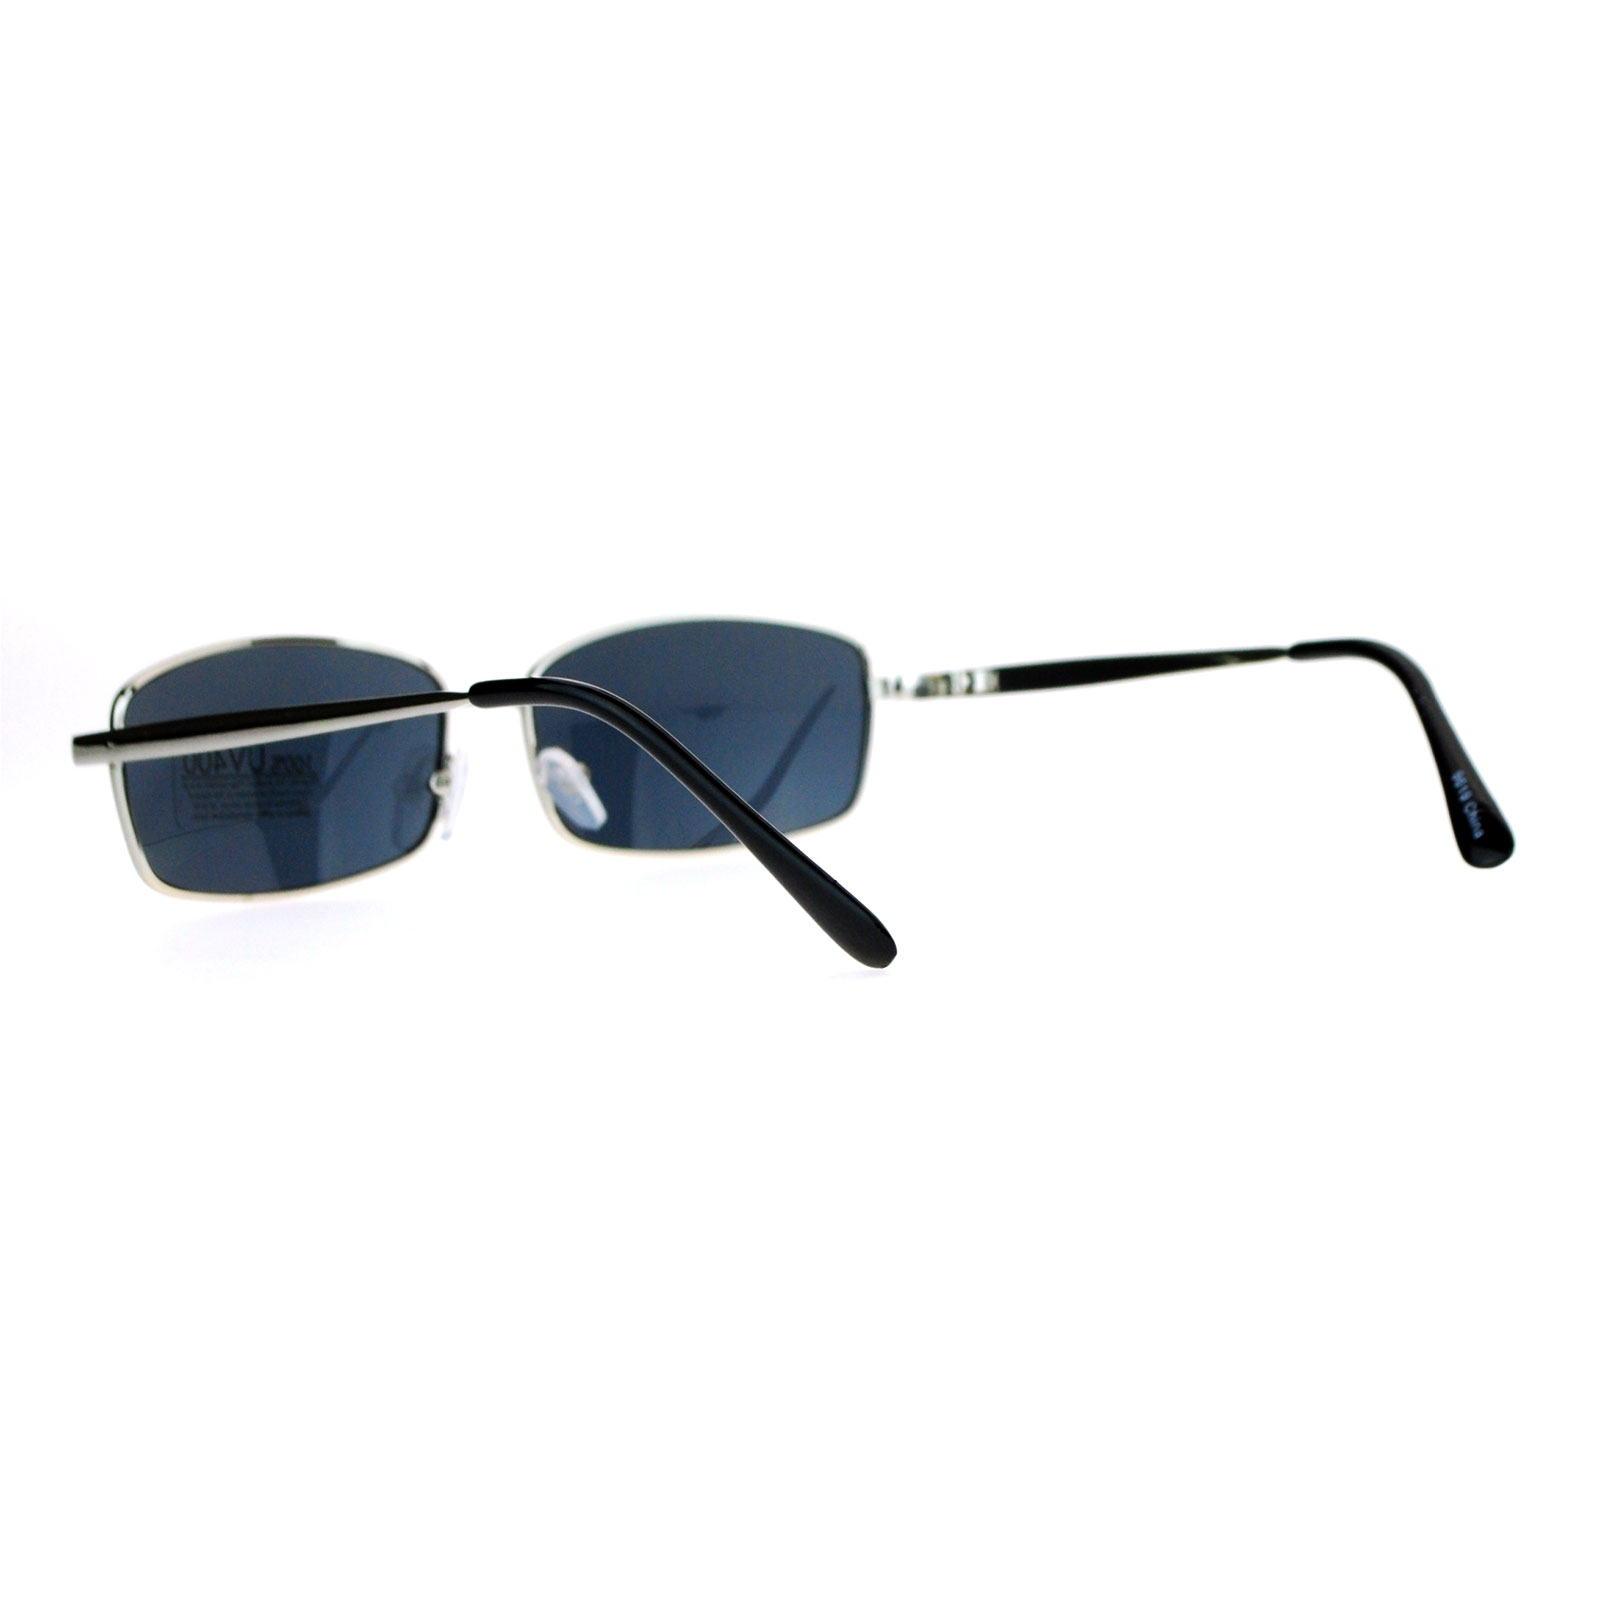 Sa106 Mens Classic Minimal Narrow Rectangular Metal Rim Sunglasses Ebay